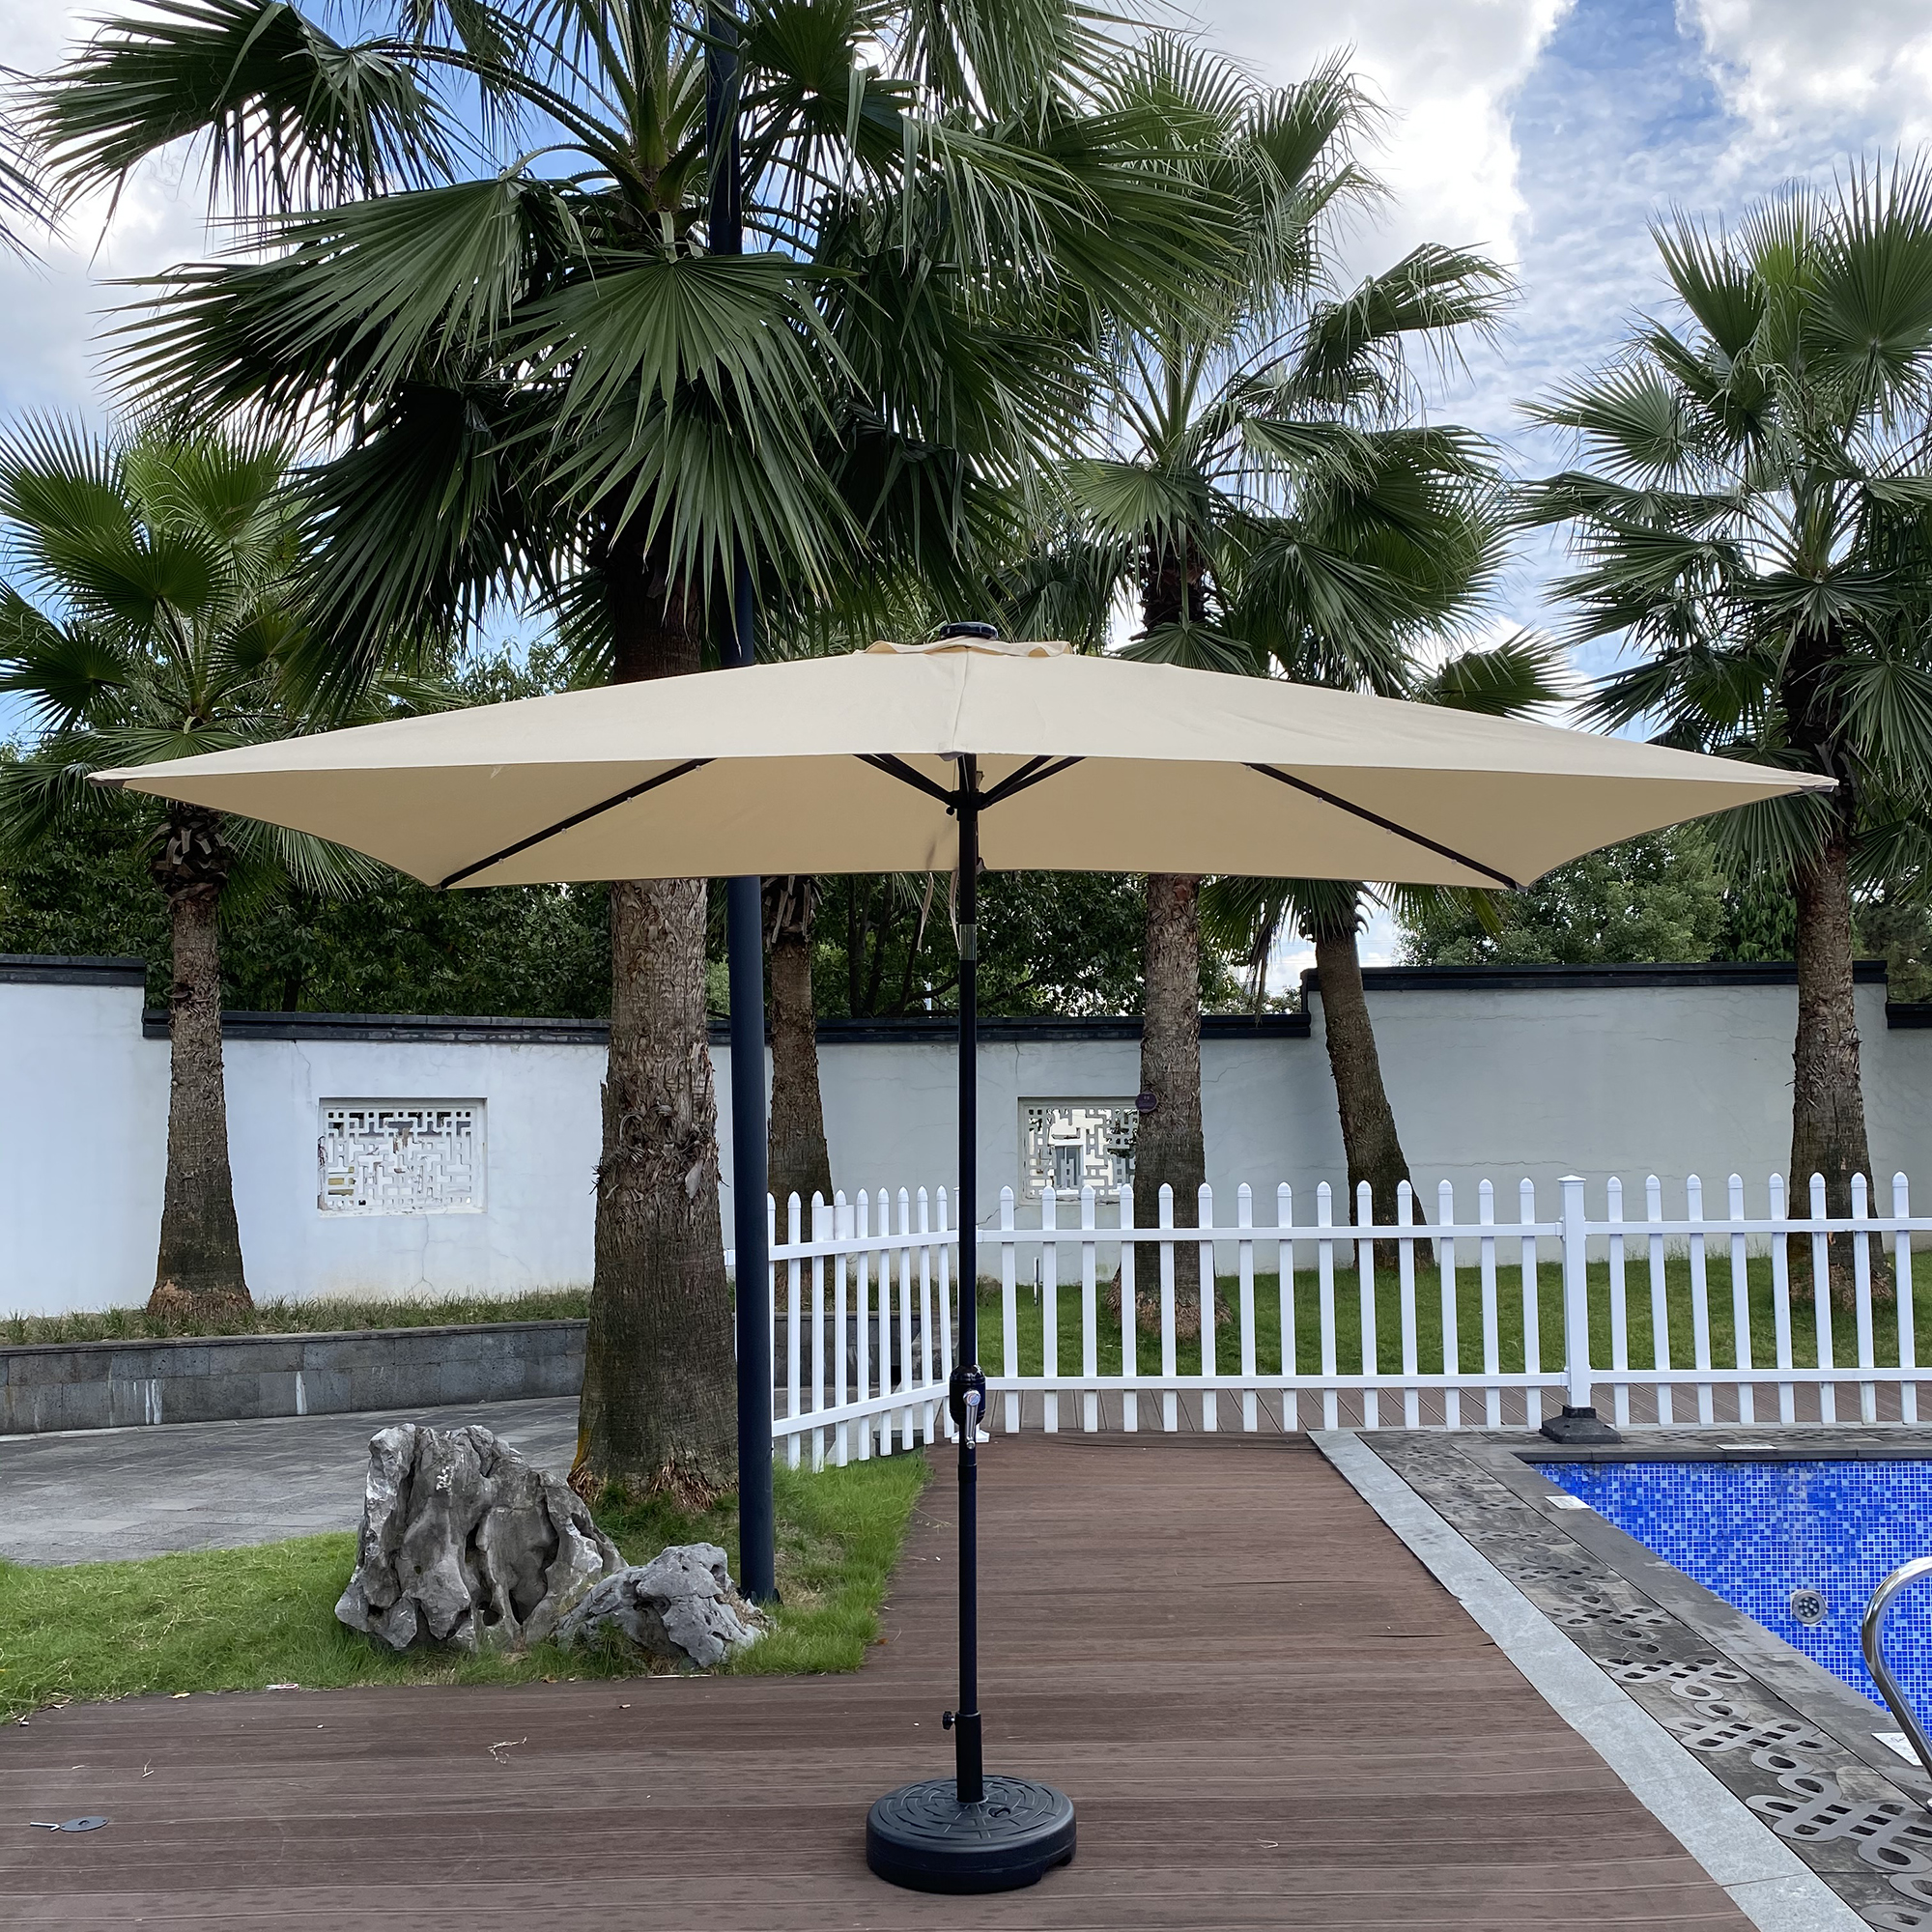 Casainc Outdoor Patio Umbrella 10 Ft x 6.5 Ft Rectangular with Crank Weather Resistant UV Protection Water Repellent Durable -CASAINC